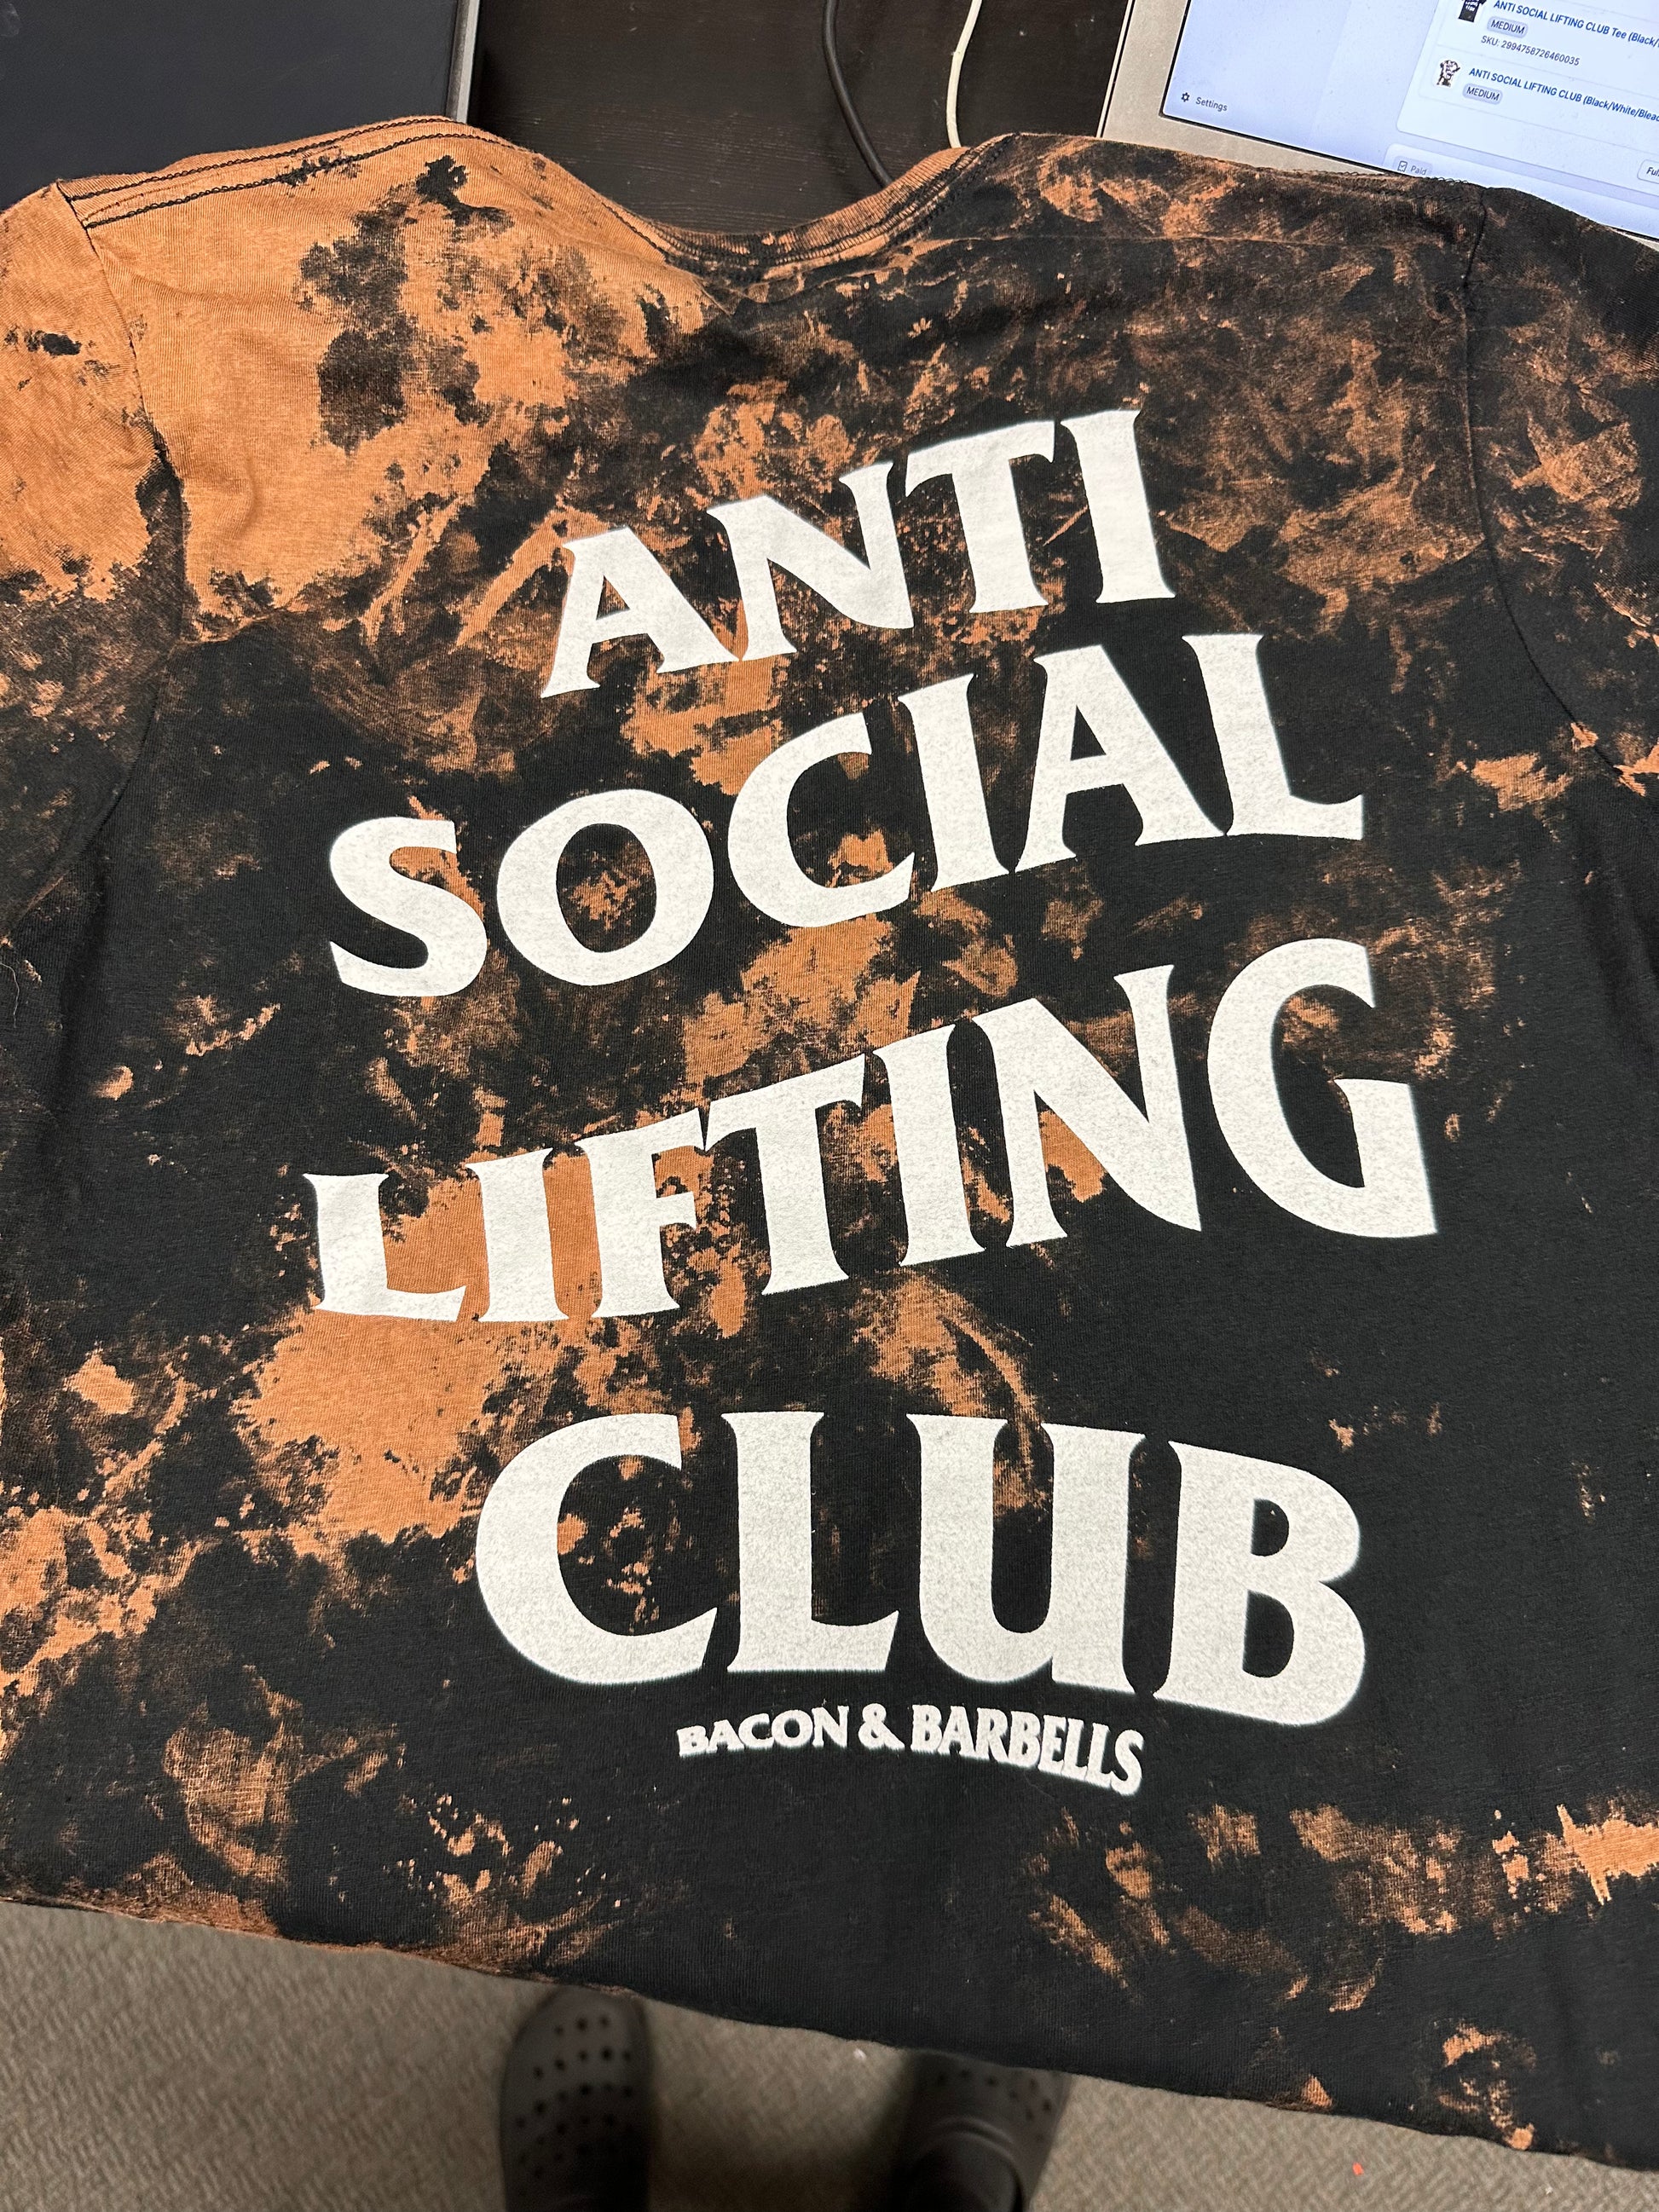 Lifting Club T-Shirt